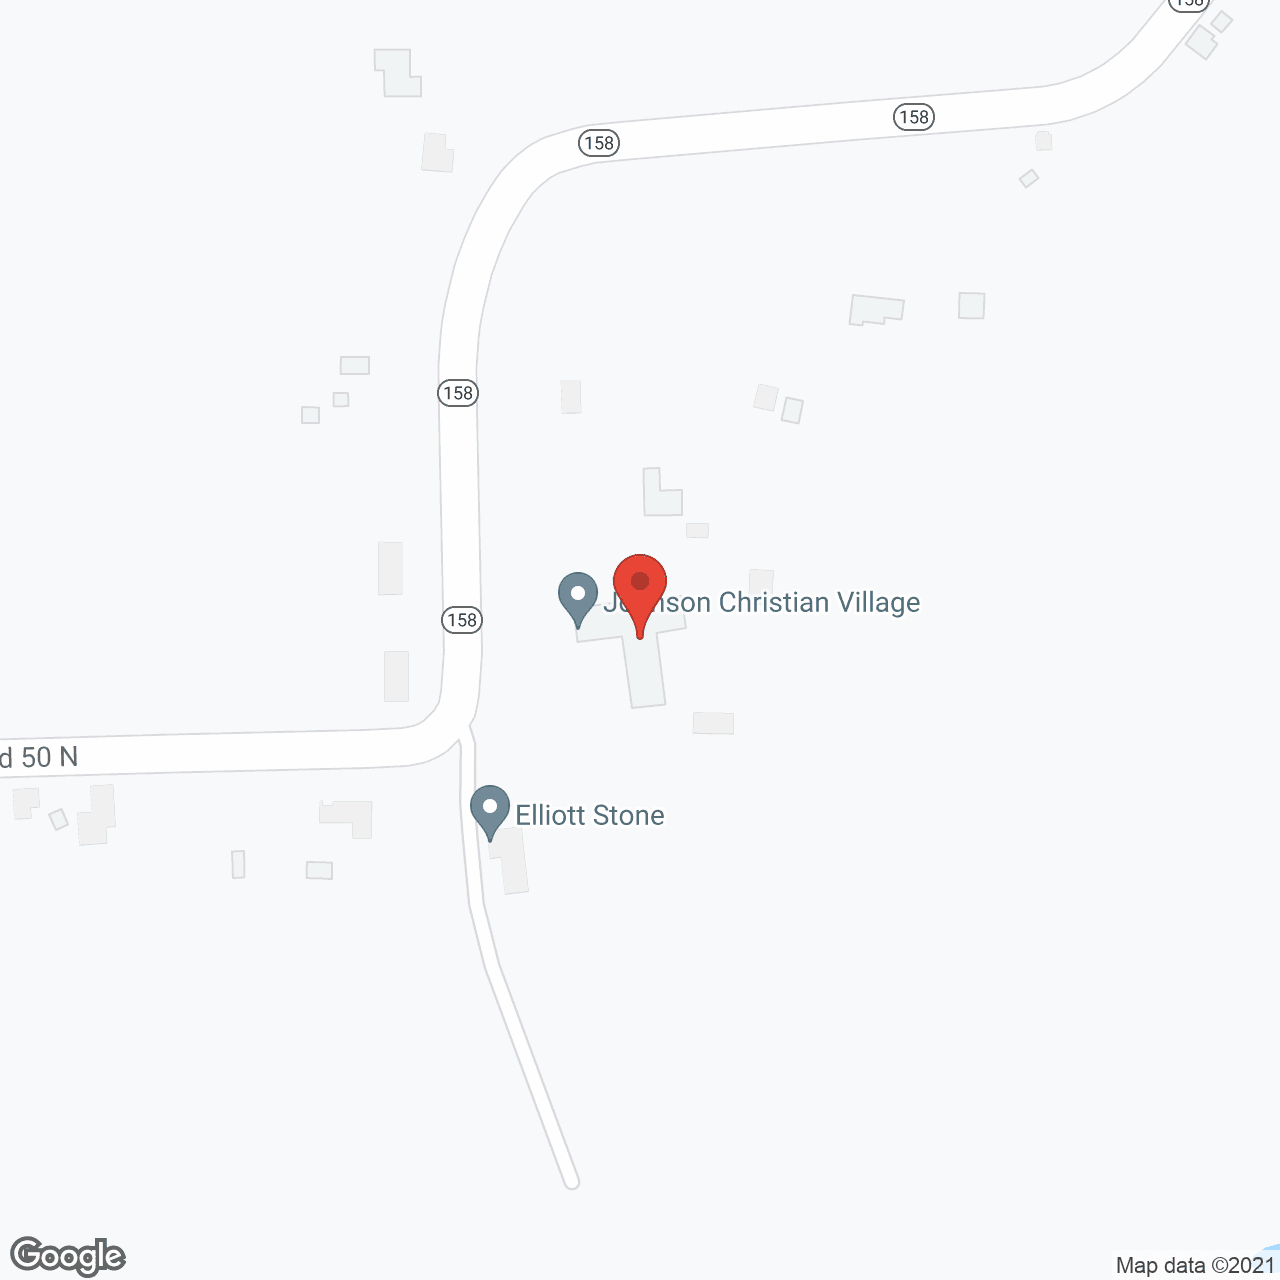 Johnson Christian Village in google map